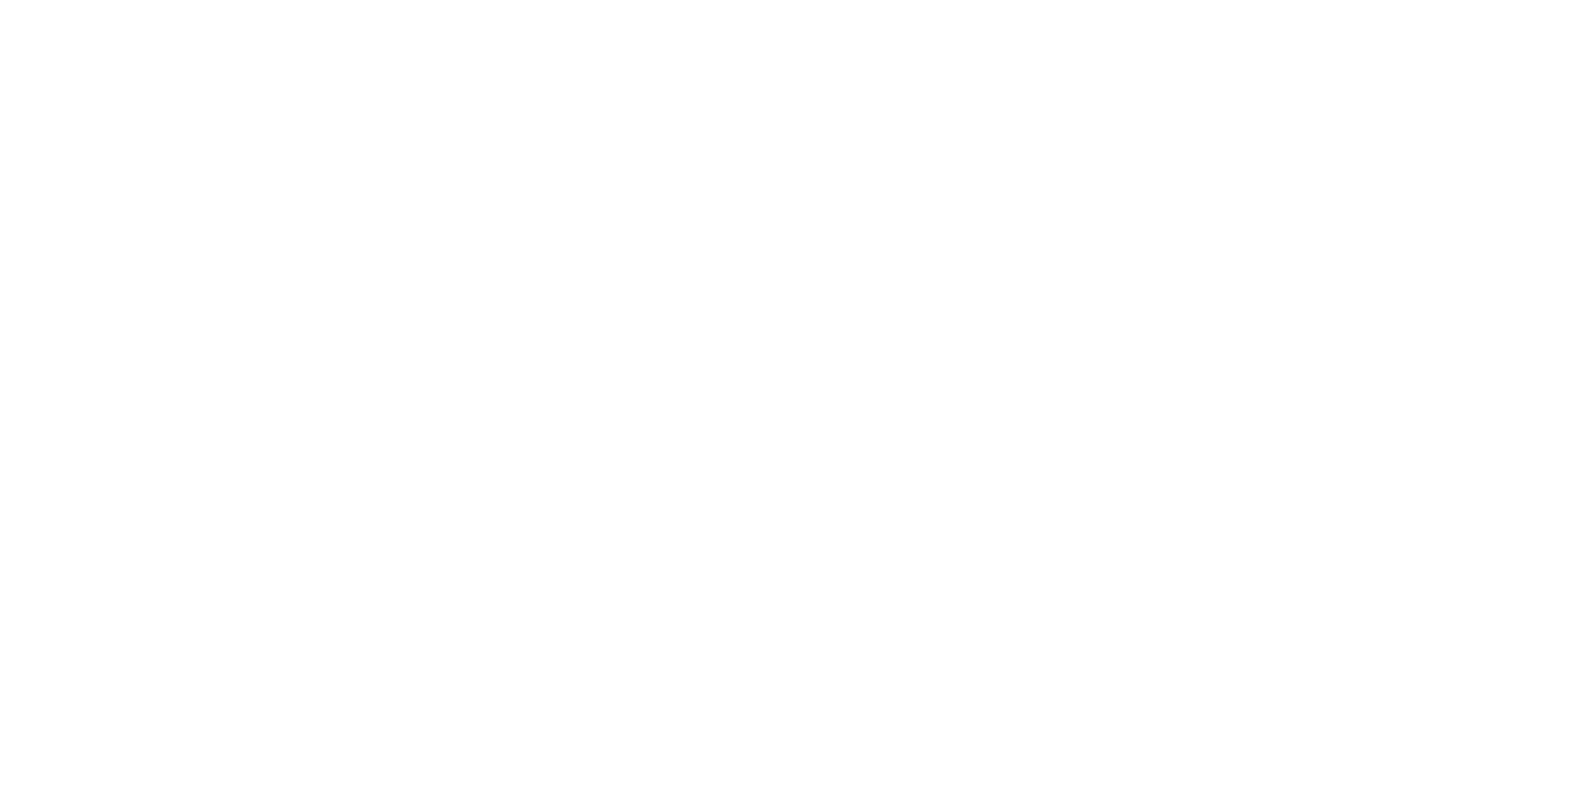 Infrastruktur_new.png